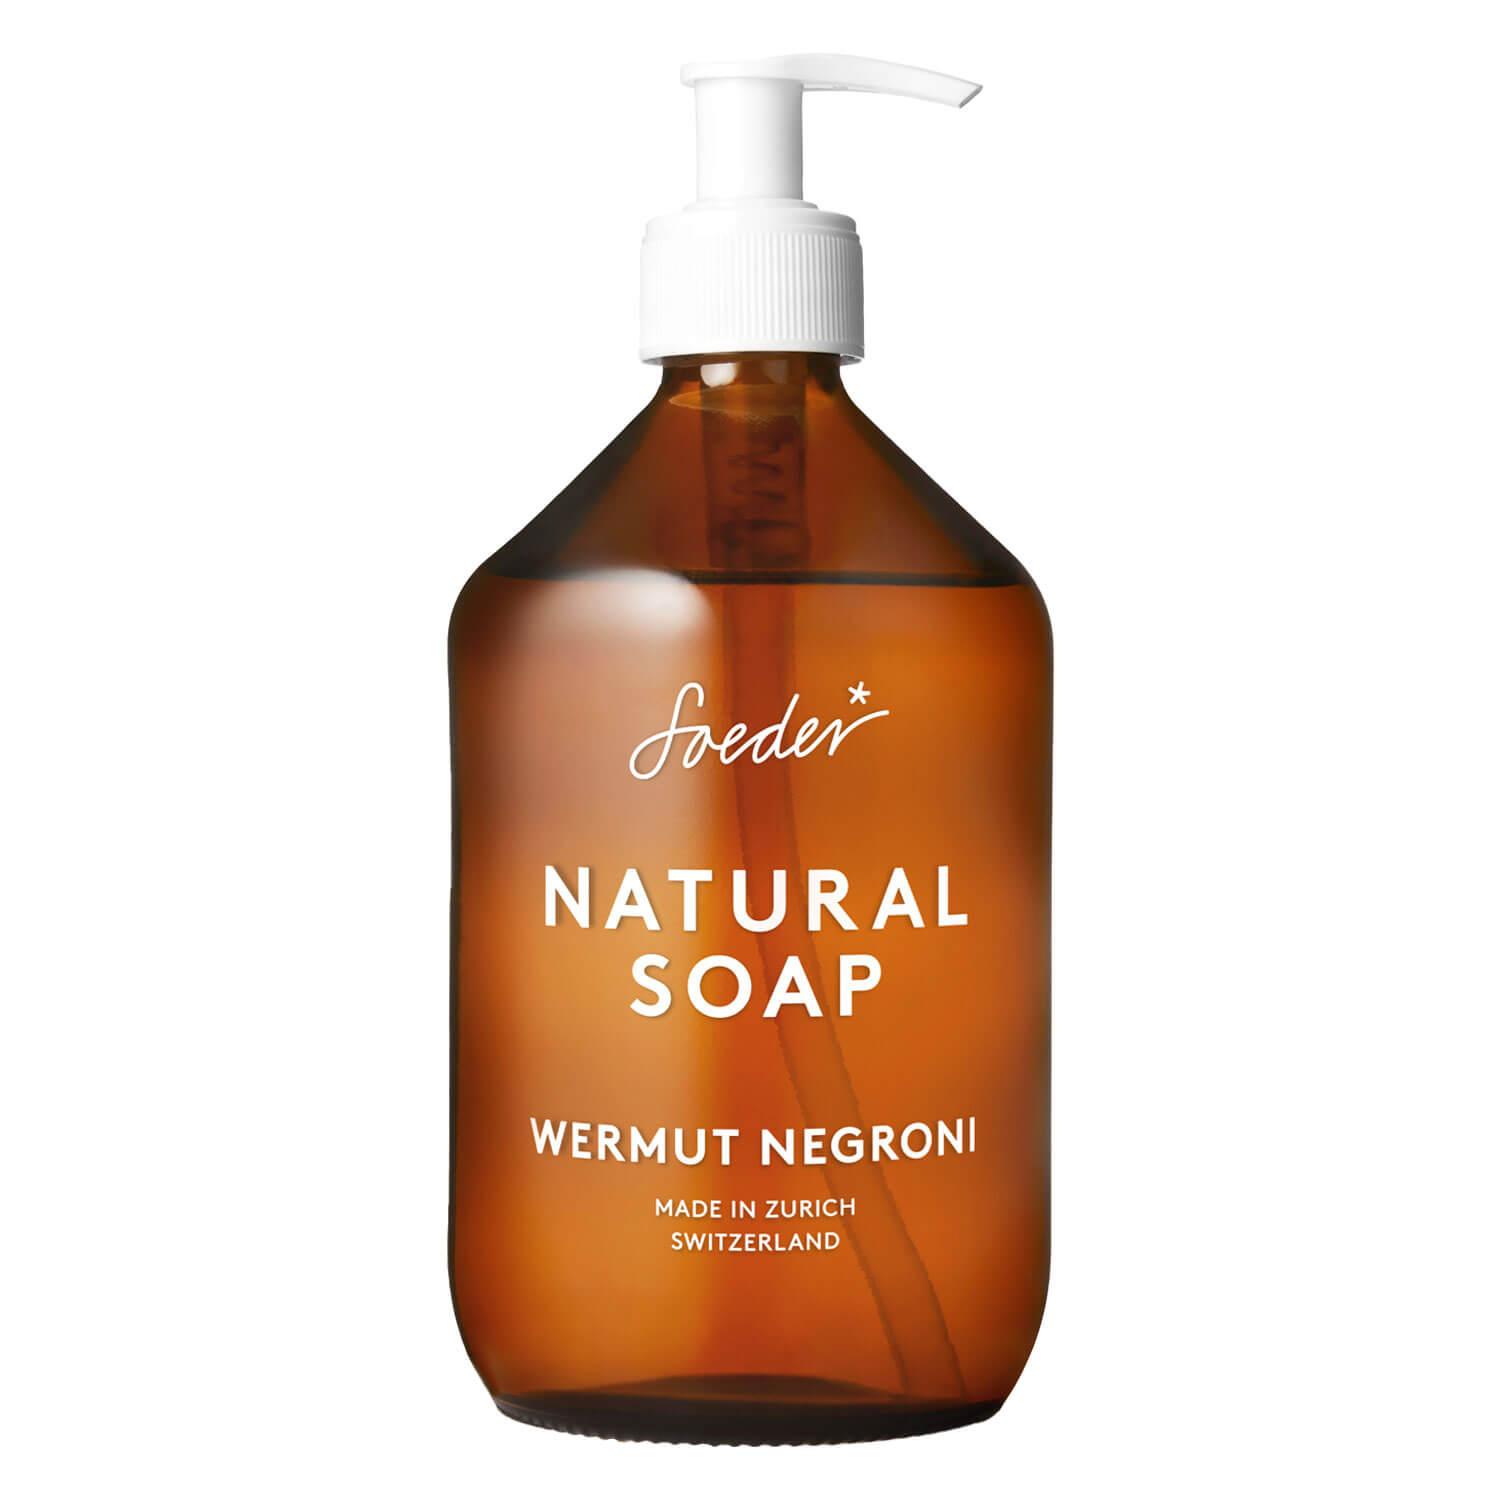 Soeder - Natural Soap Wermut Negroni